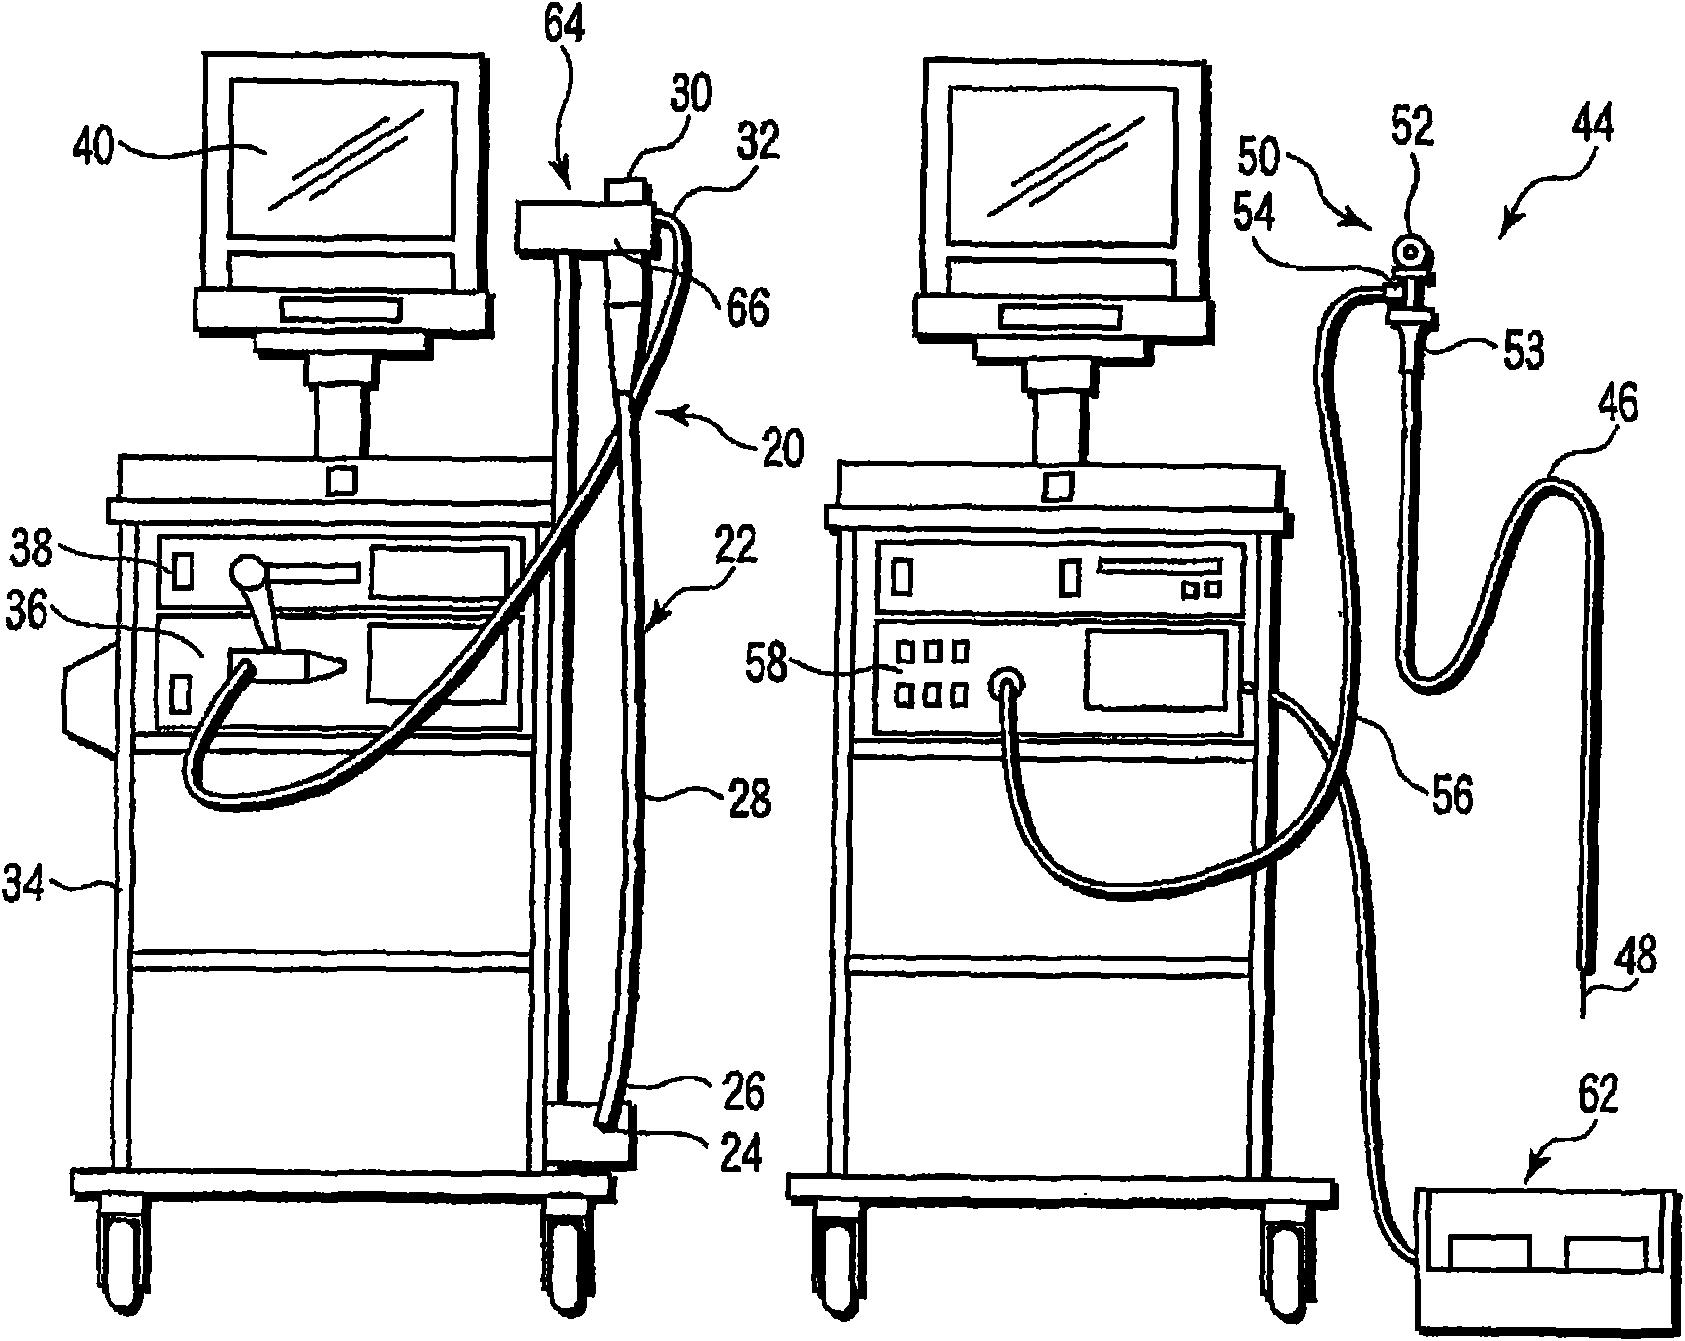 Endoscope system